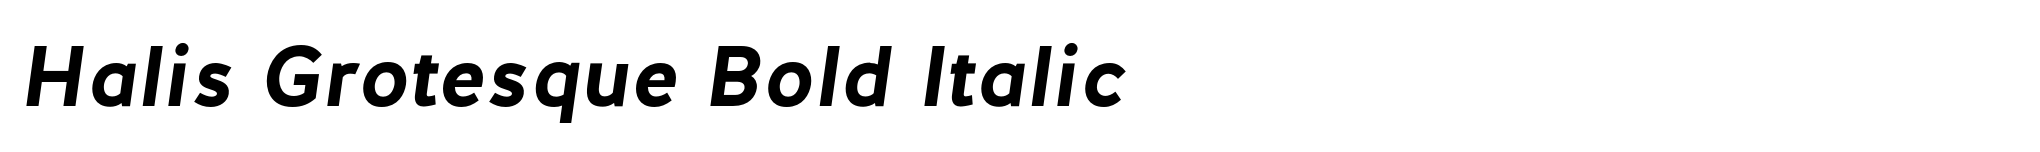 Halis Grotesque Bold Italic image